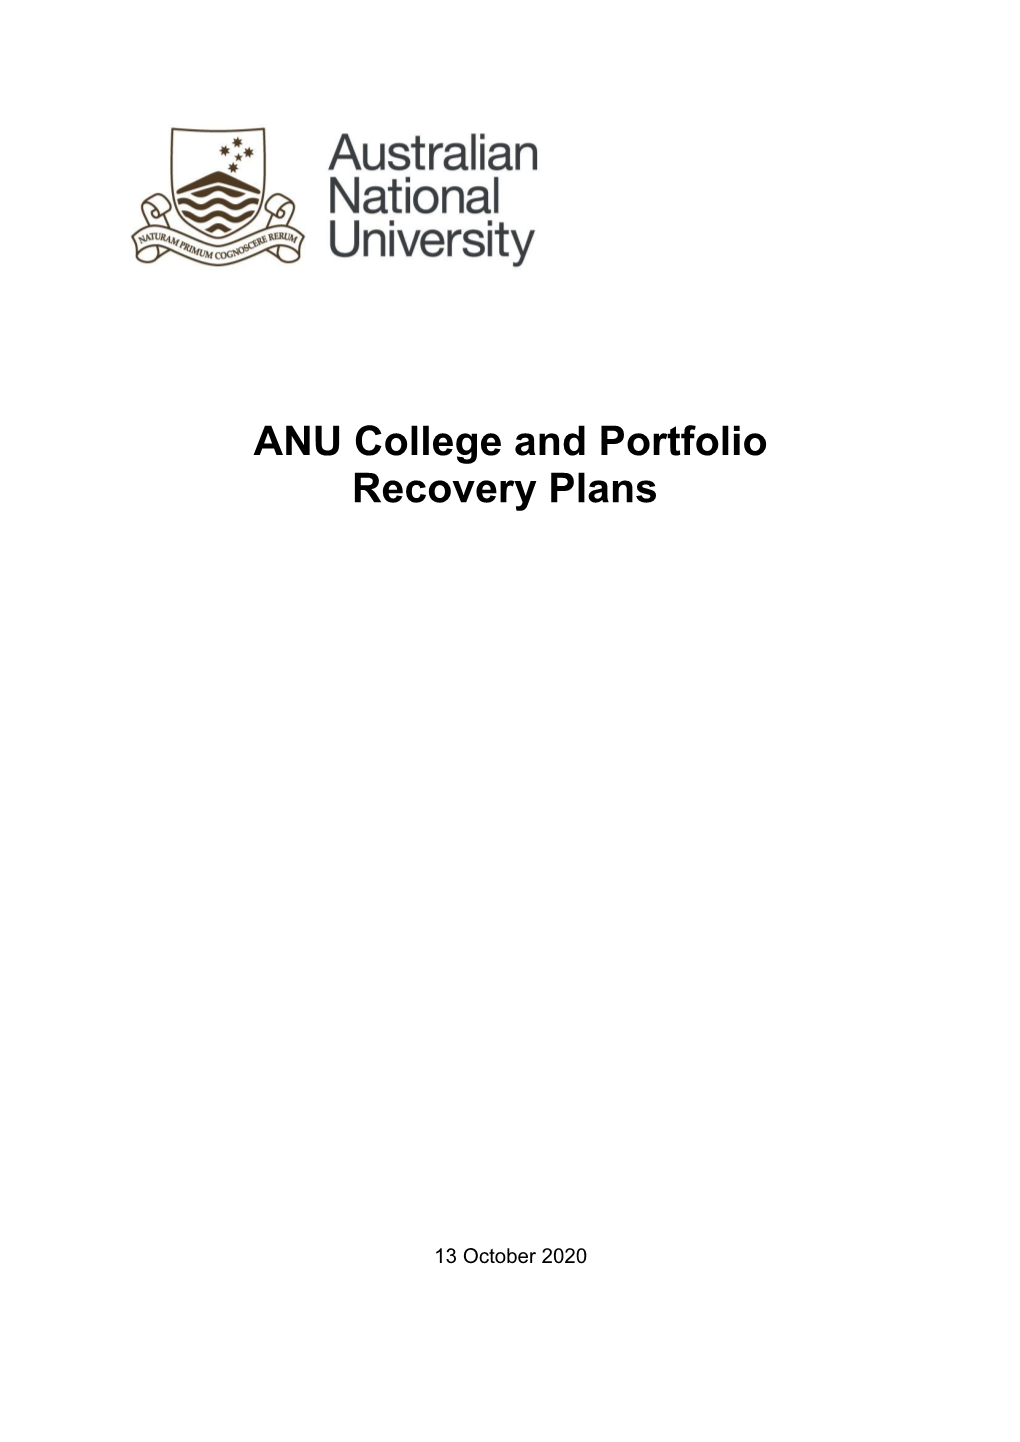 ANU College and Portfolio Recovery Plans